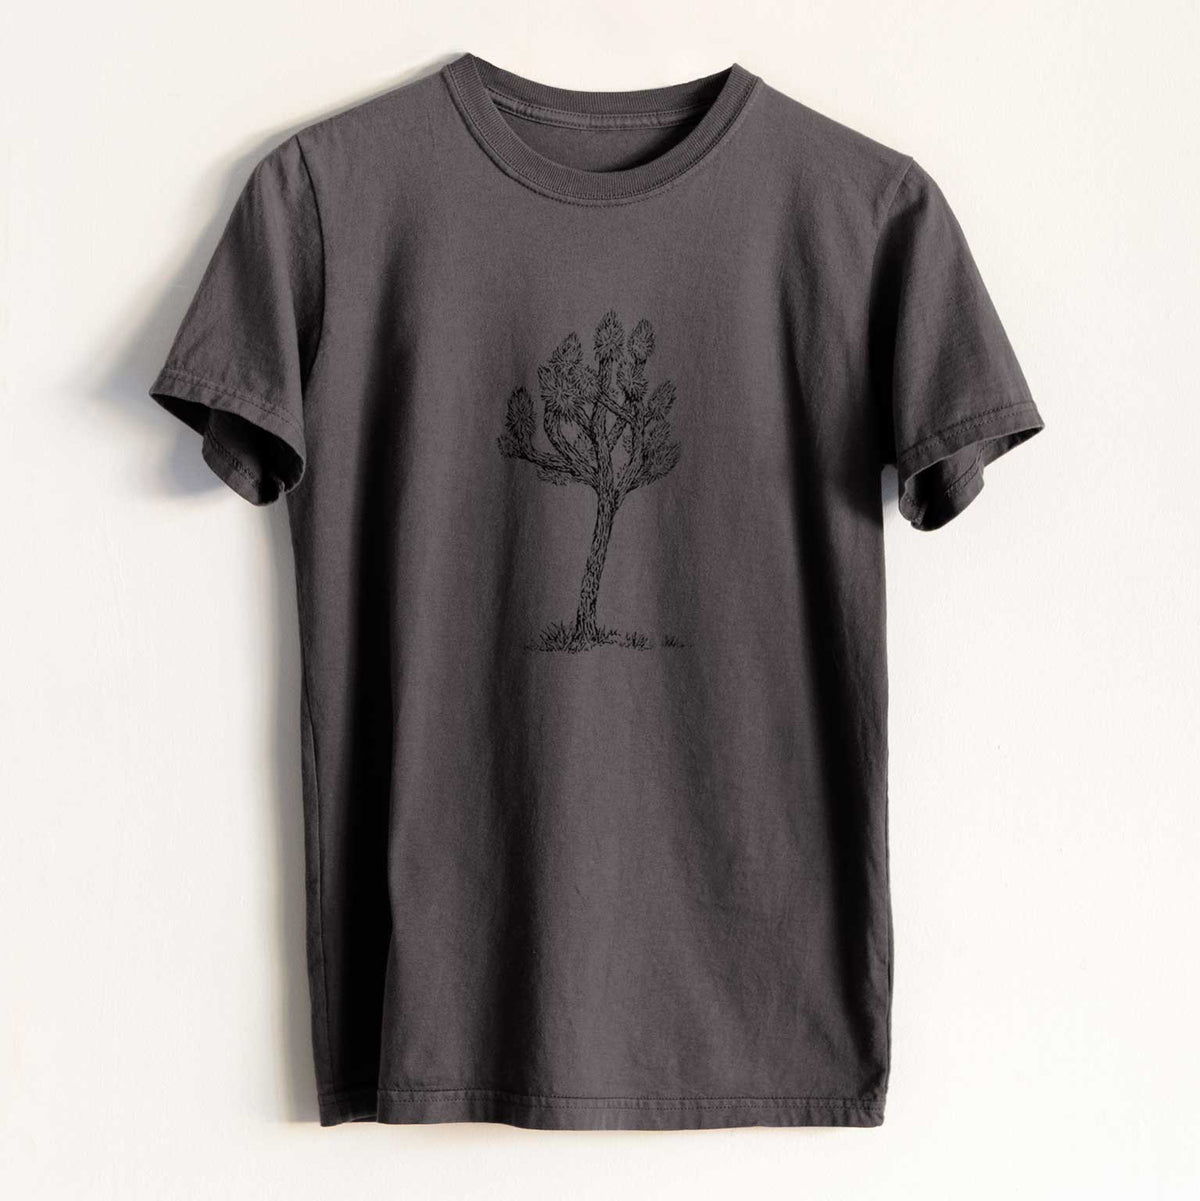 Yucca brevifolia - Joshua Tree - Heavyweight Men&#39;s 100% Organic Cotton Tee